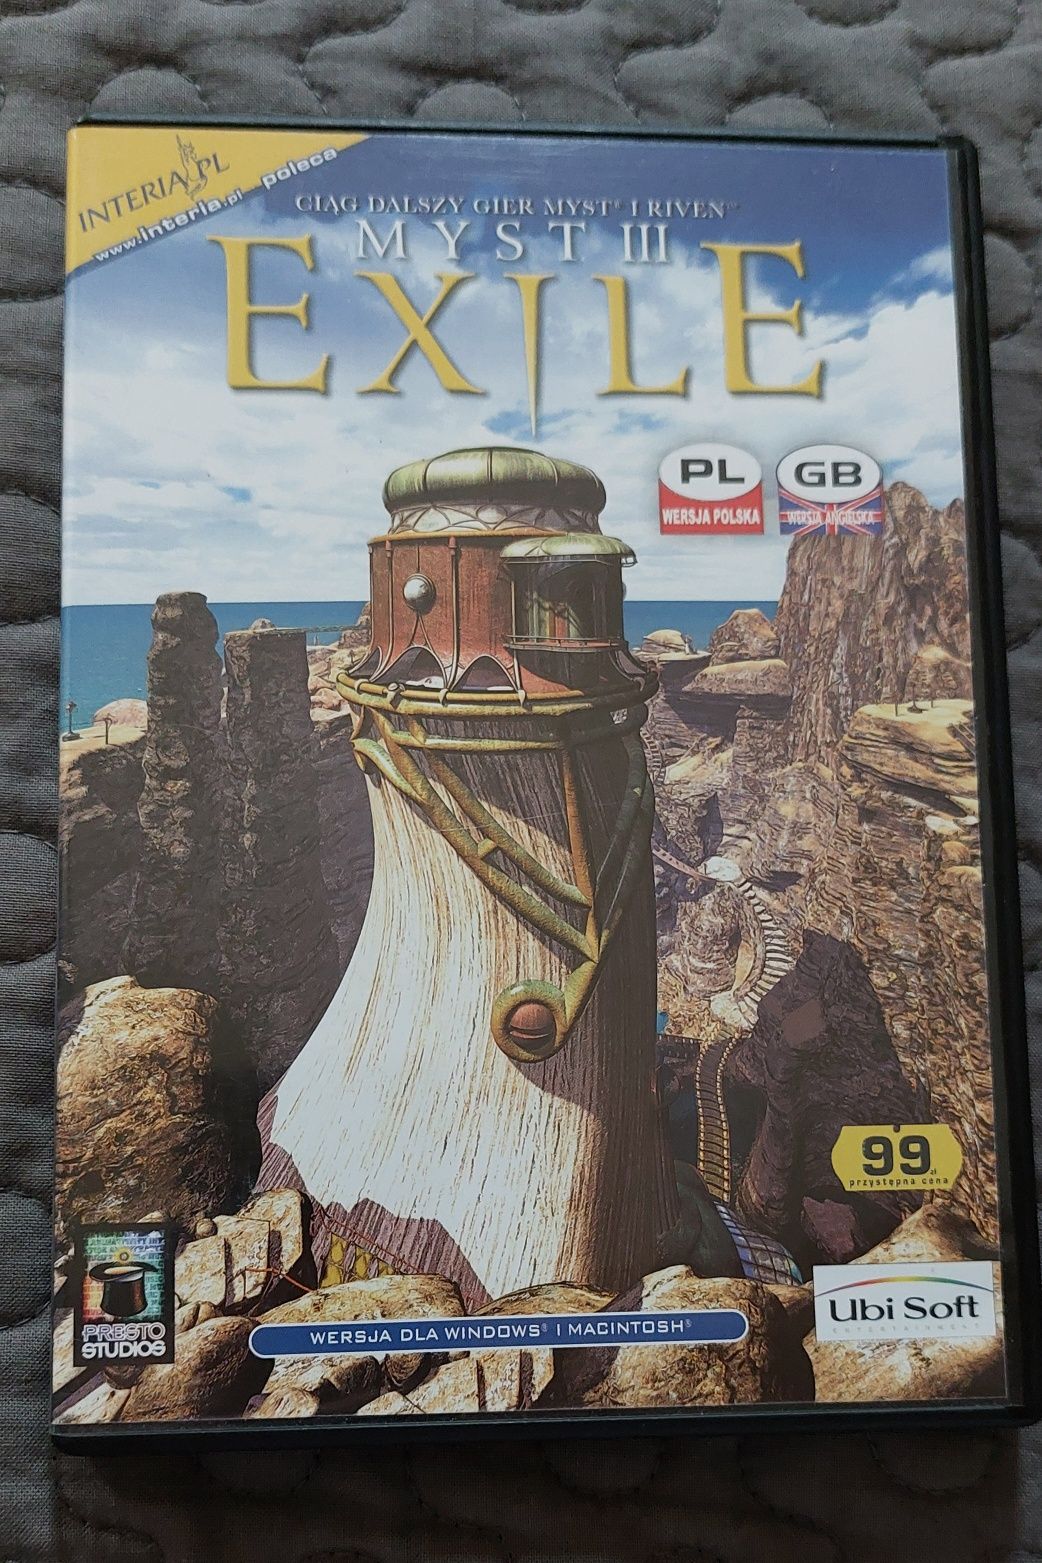 Myst III Exile PC